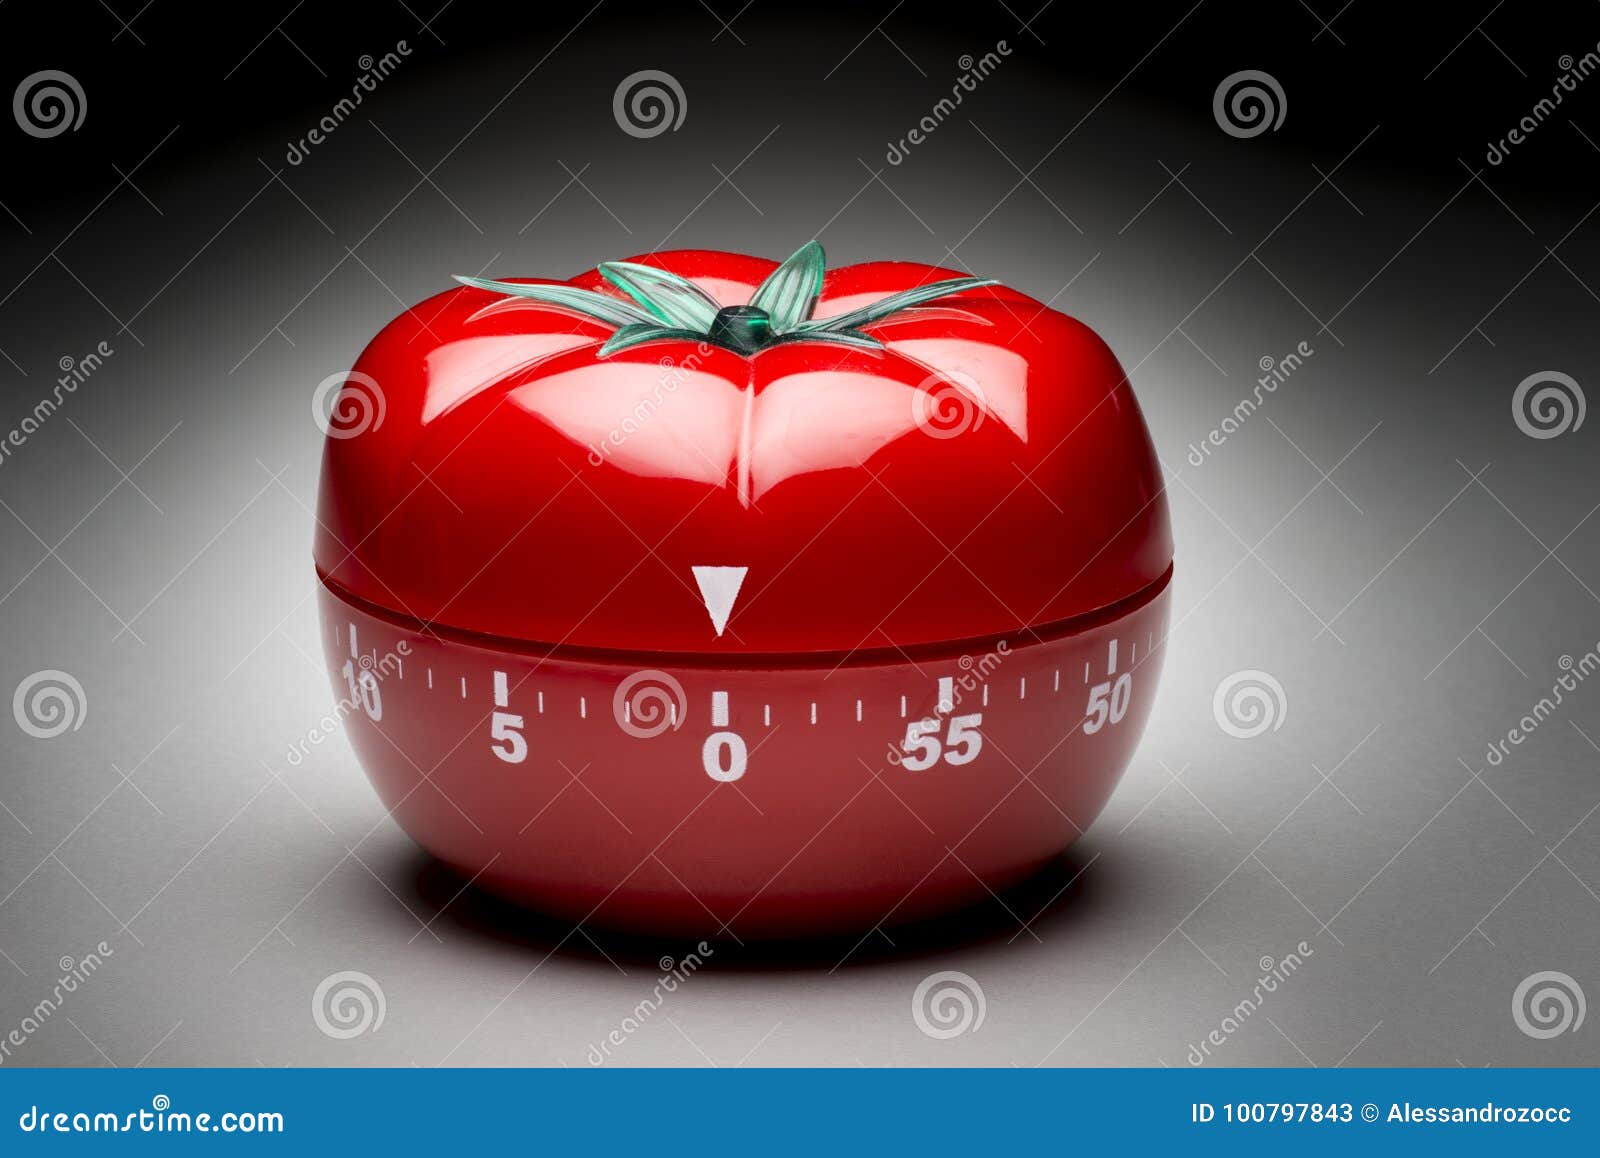 Tomato Timer To Fight Stock Image - of twenty, five: 100797843